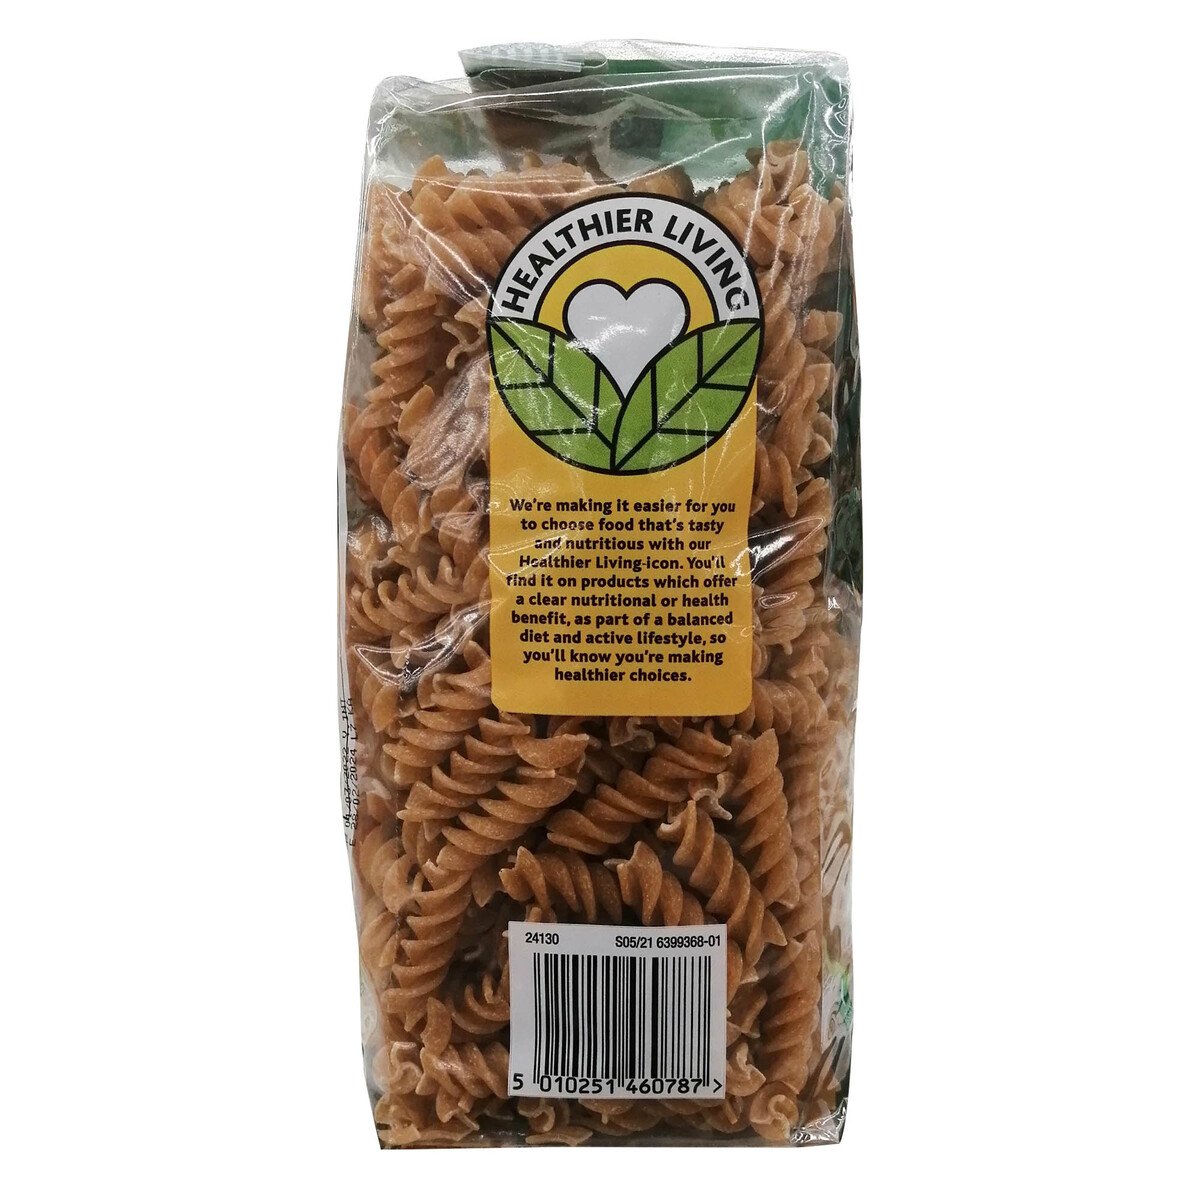 Morrisons Whole Wheat Fusilli 500 g